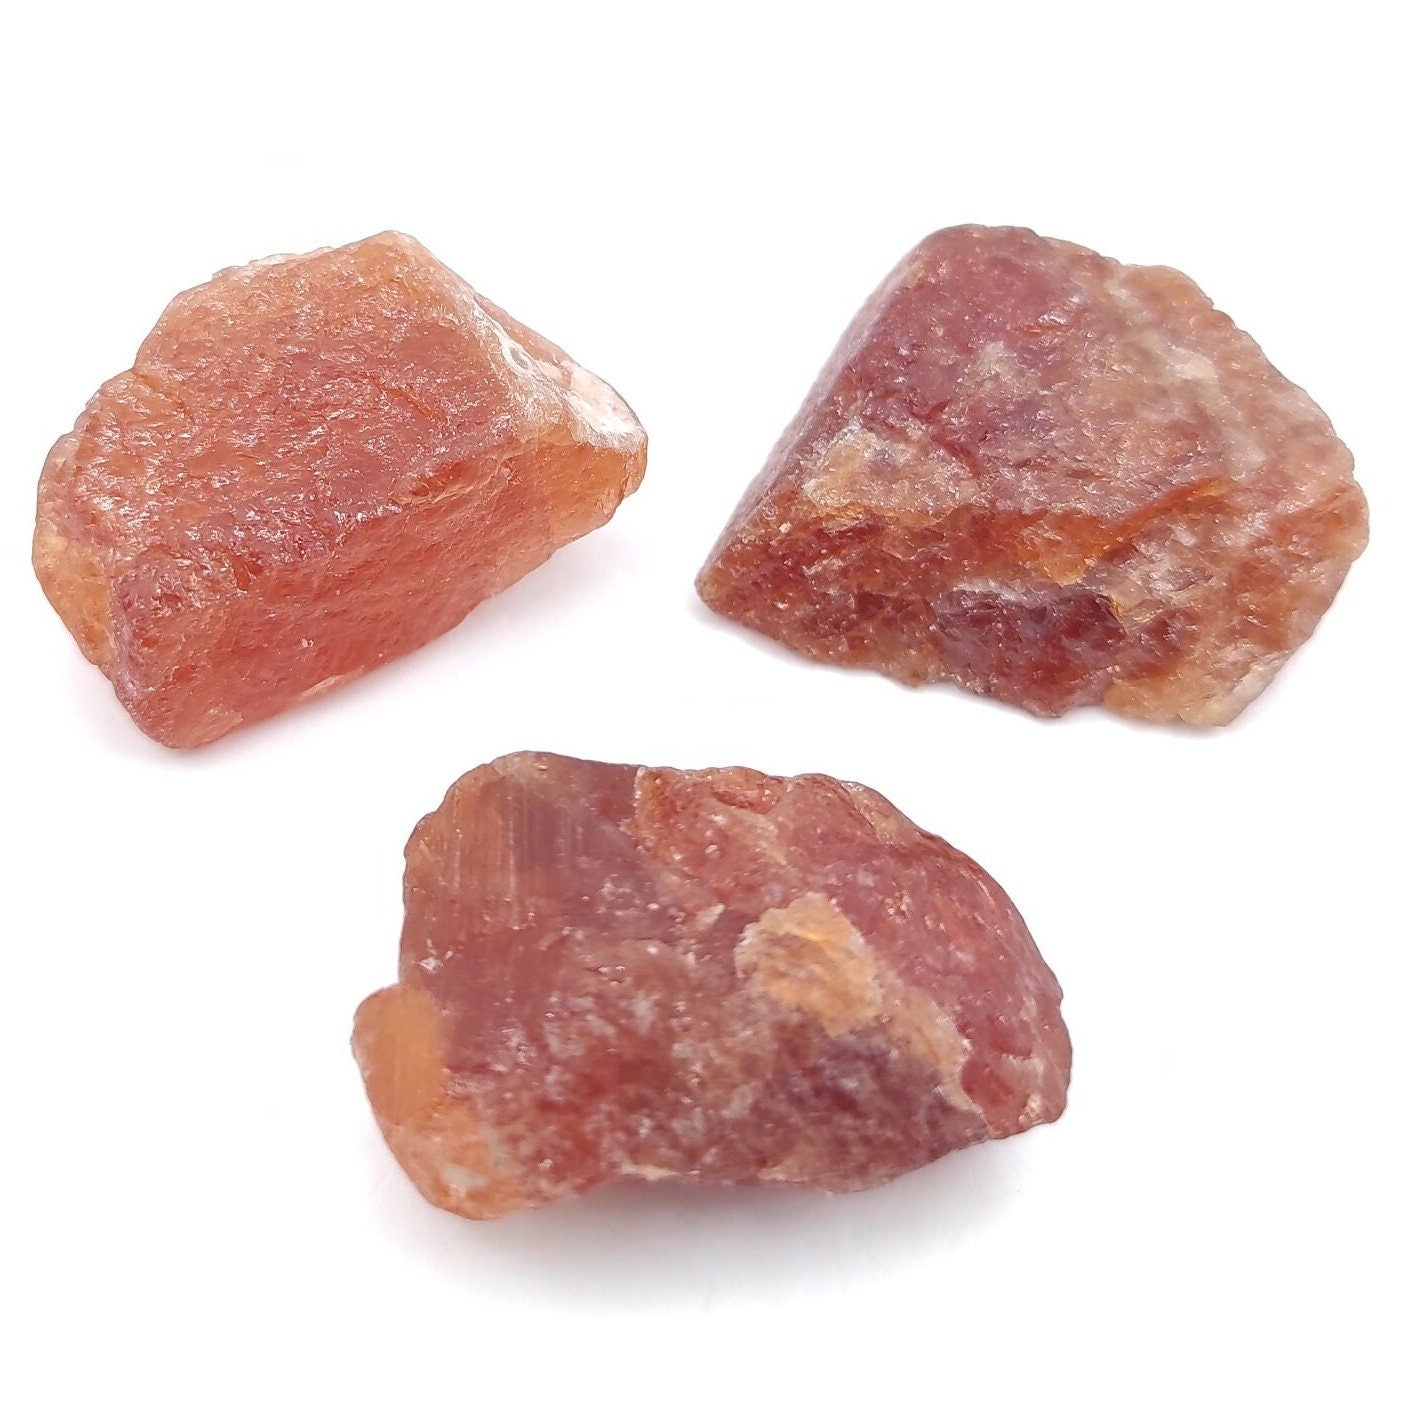 145ct 3pcs Hessonite Garnet Lot - Natural Hessonite Garnet - Loose Gemstones - Rough Gems - Raw Garnet Crystals from Pakistan